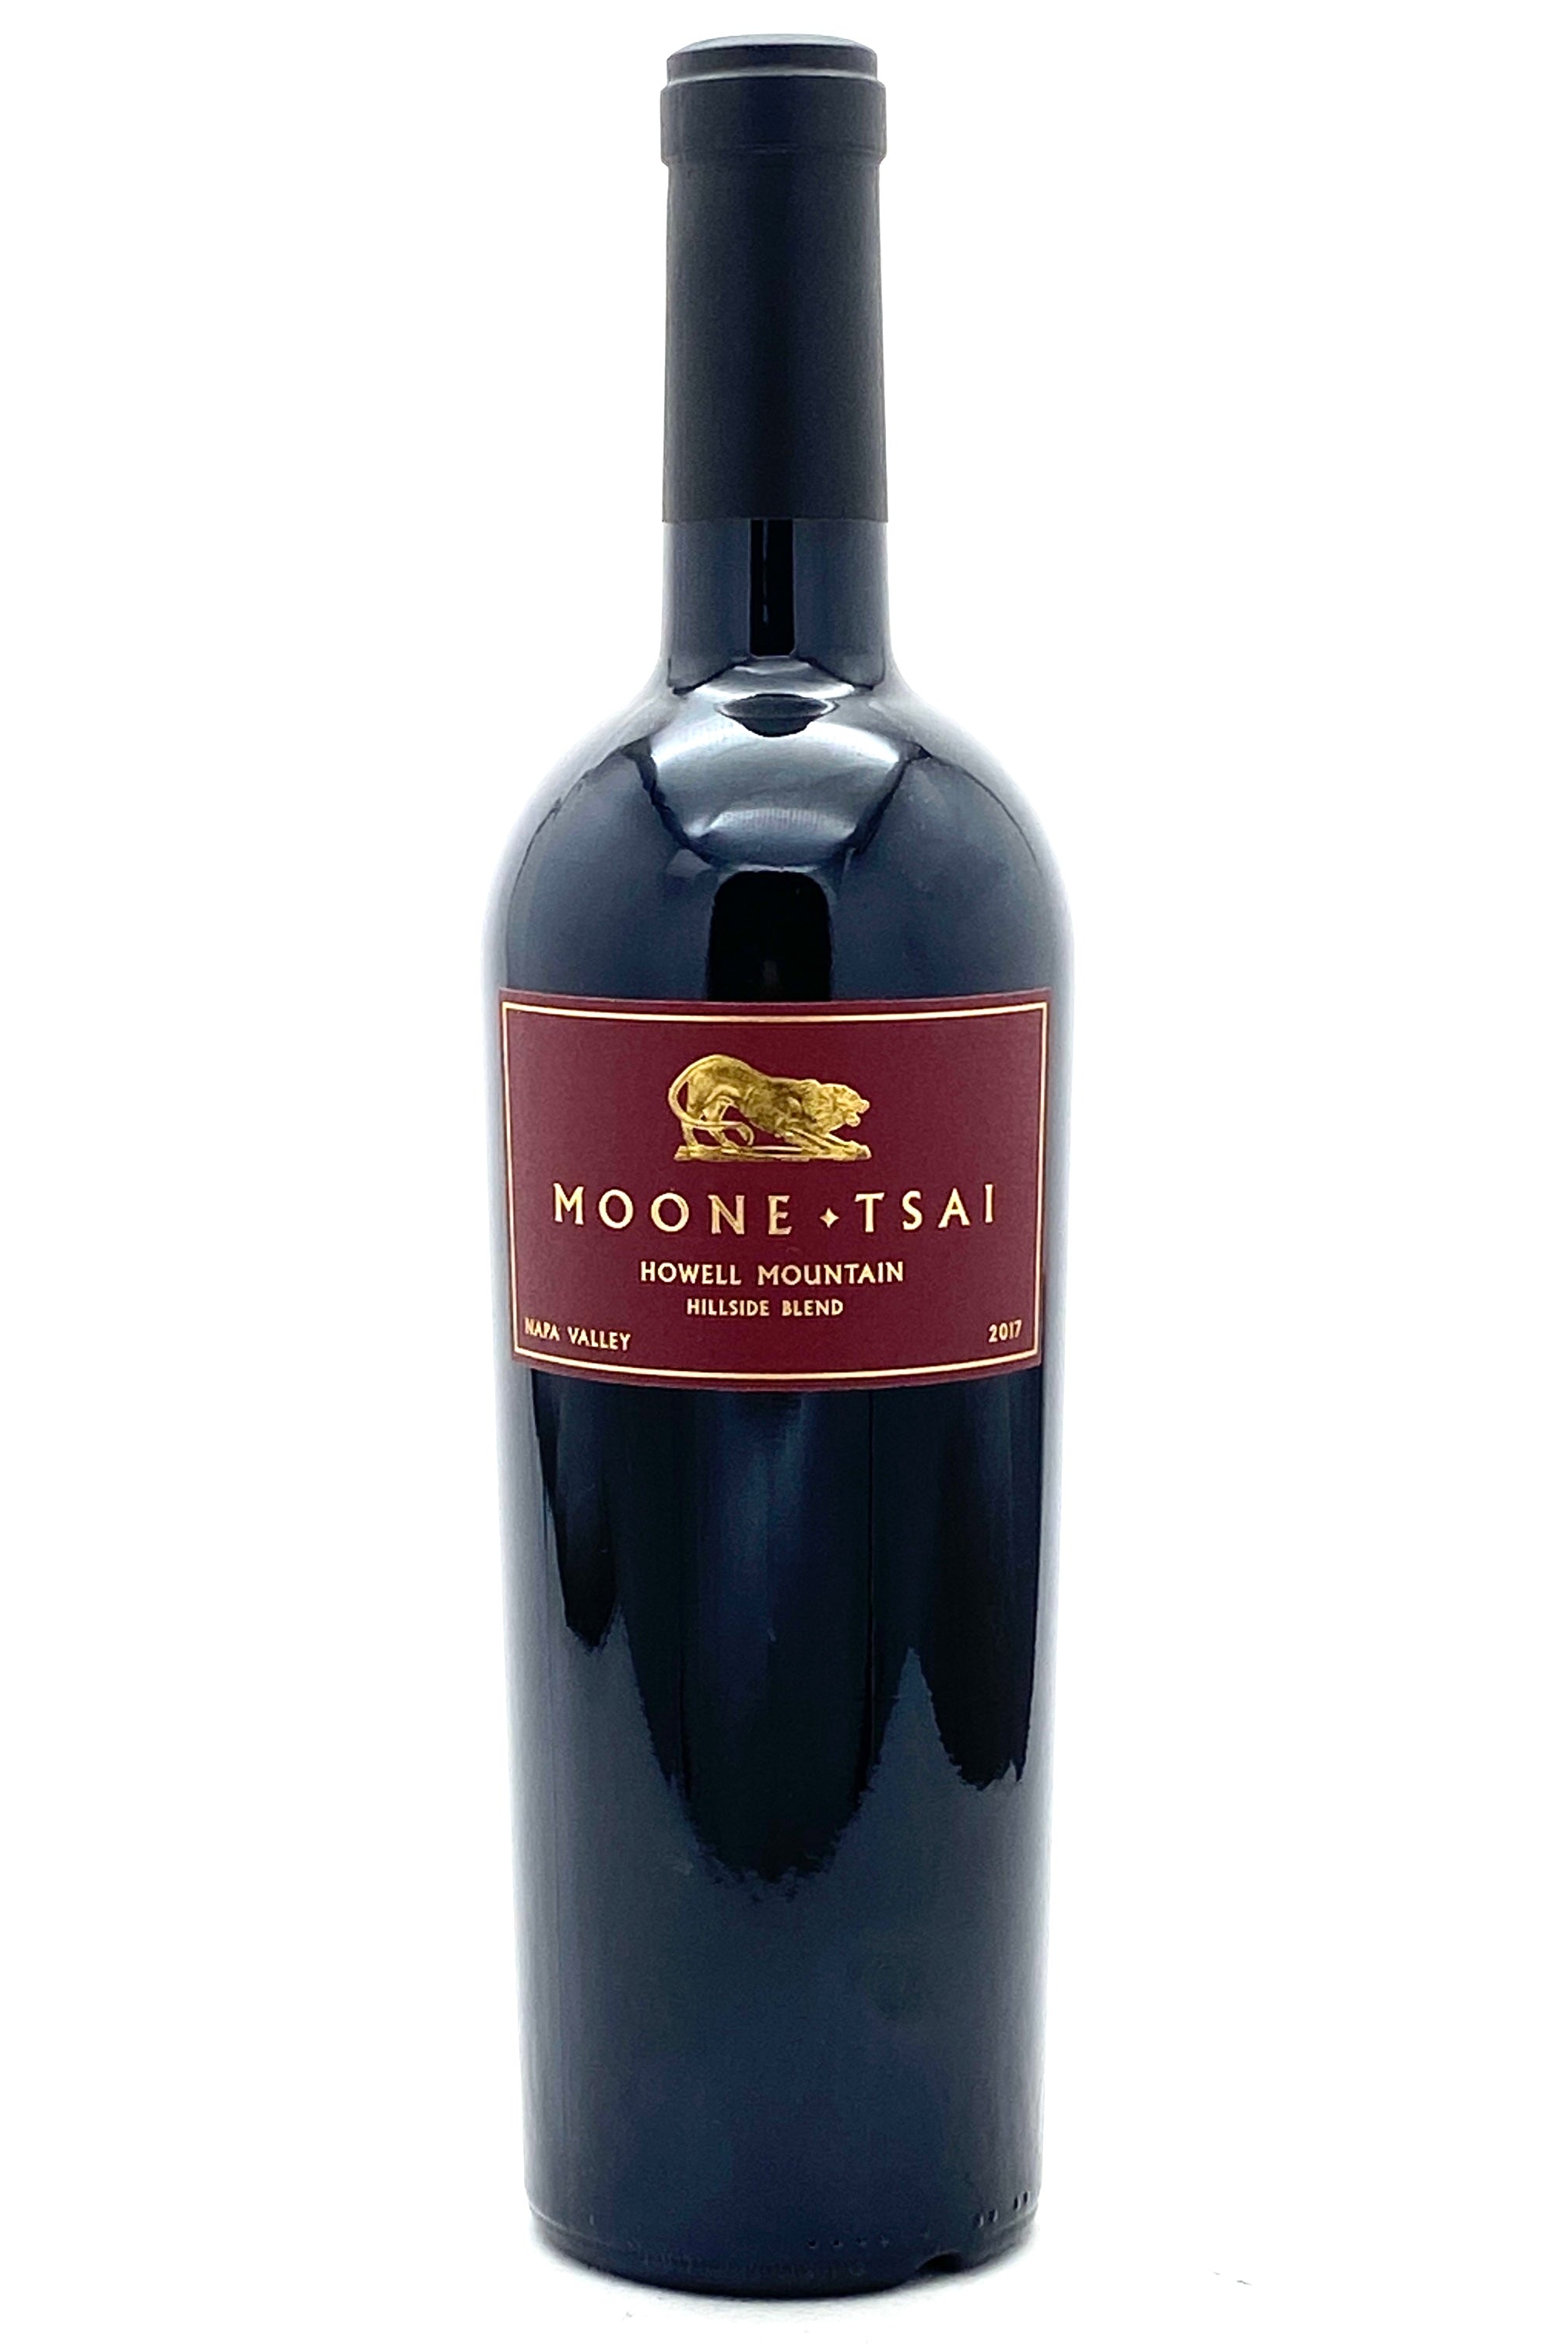 Moone-Tsai 2017 Howell Mountain Blend Red Wine - Blackwell's Wines & Spirits